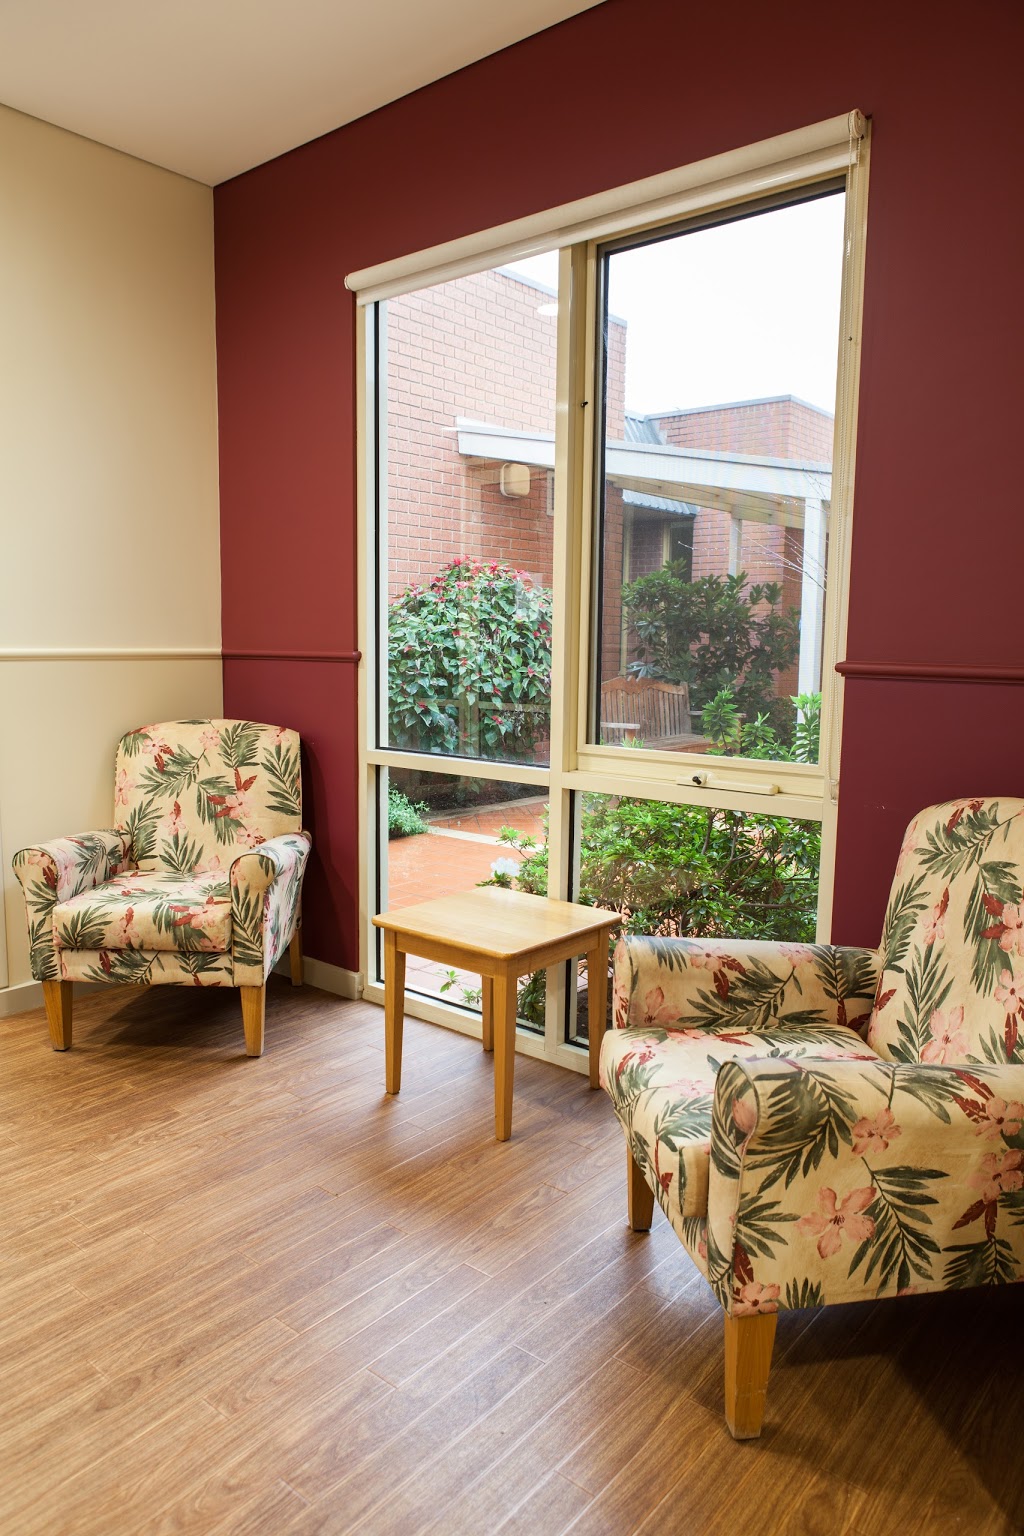 Darvall Lodge Nursing Home | health | 521 Princes Hwy, Noble Park VIC 3174, Australia | 0395491400 OR +61 3 9549 1400